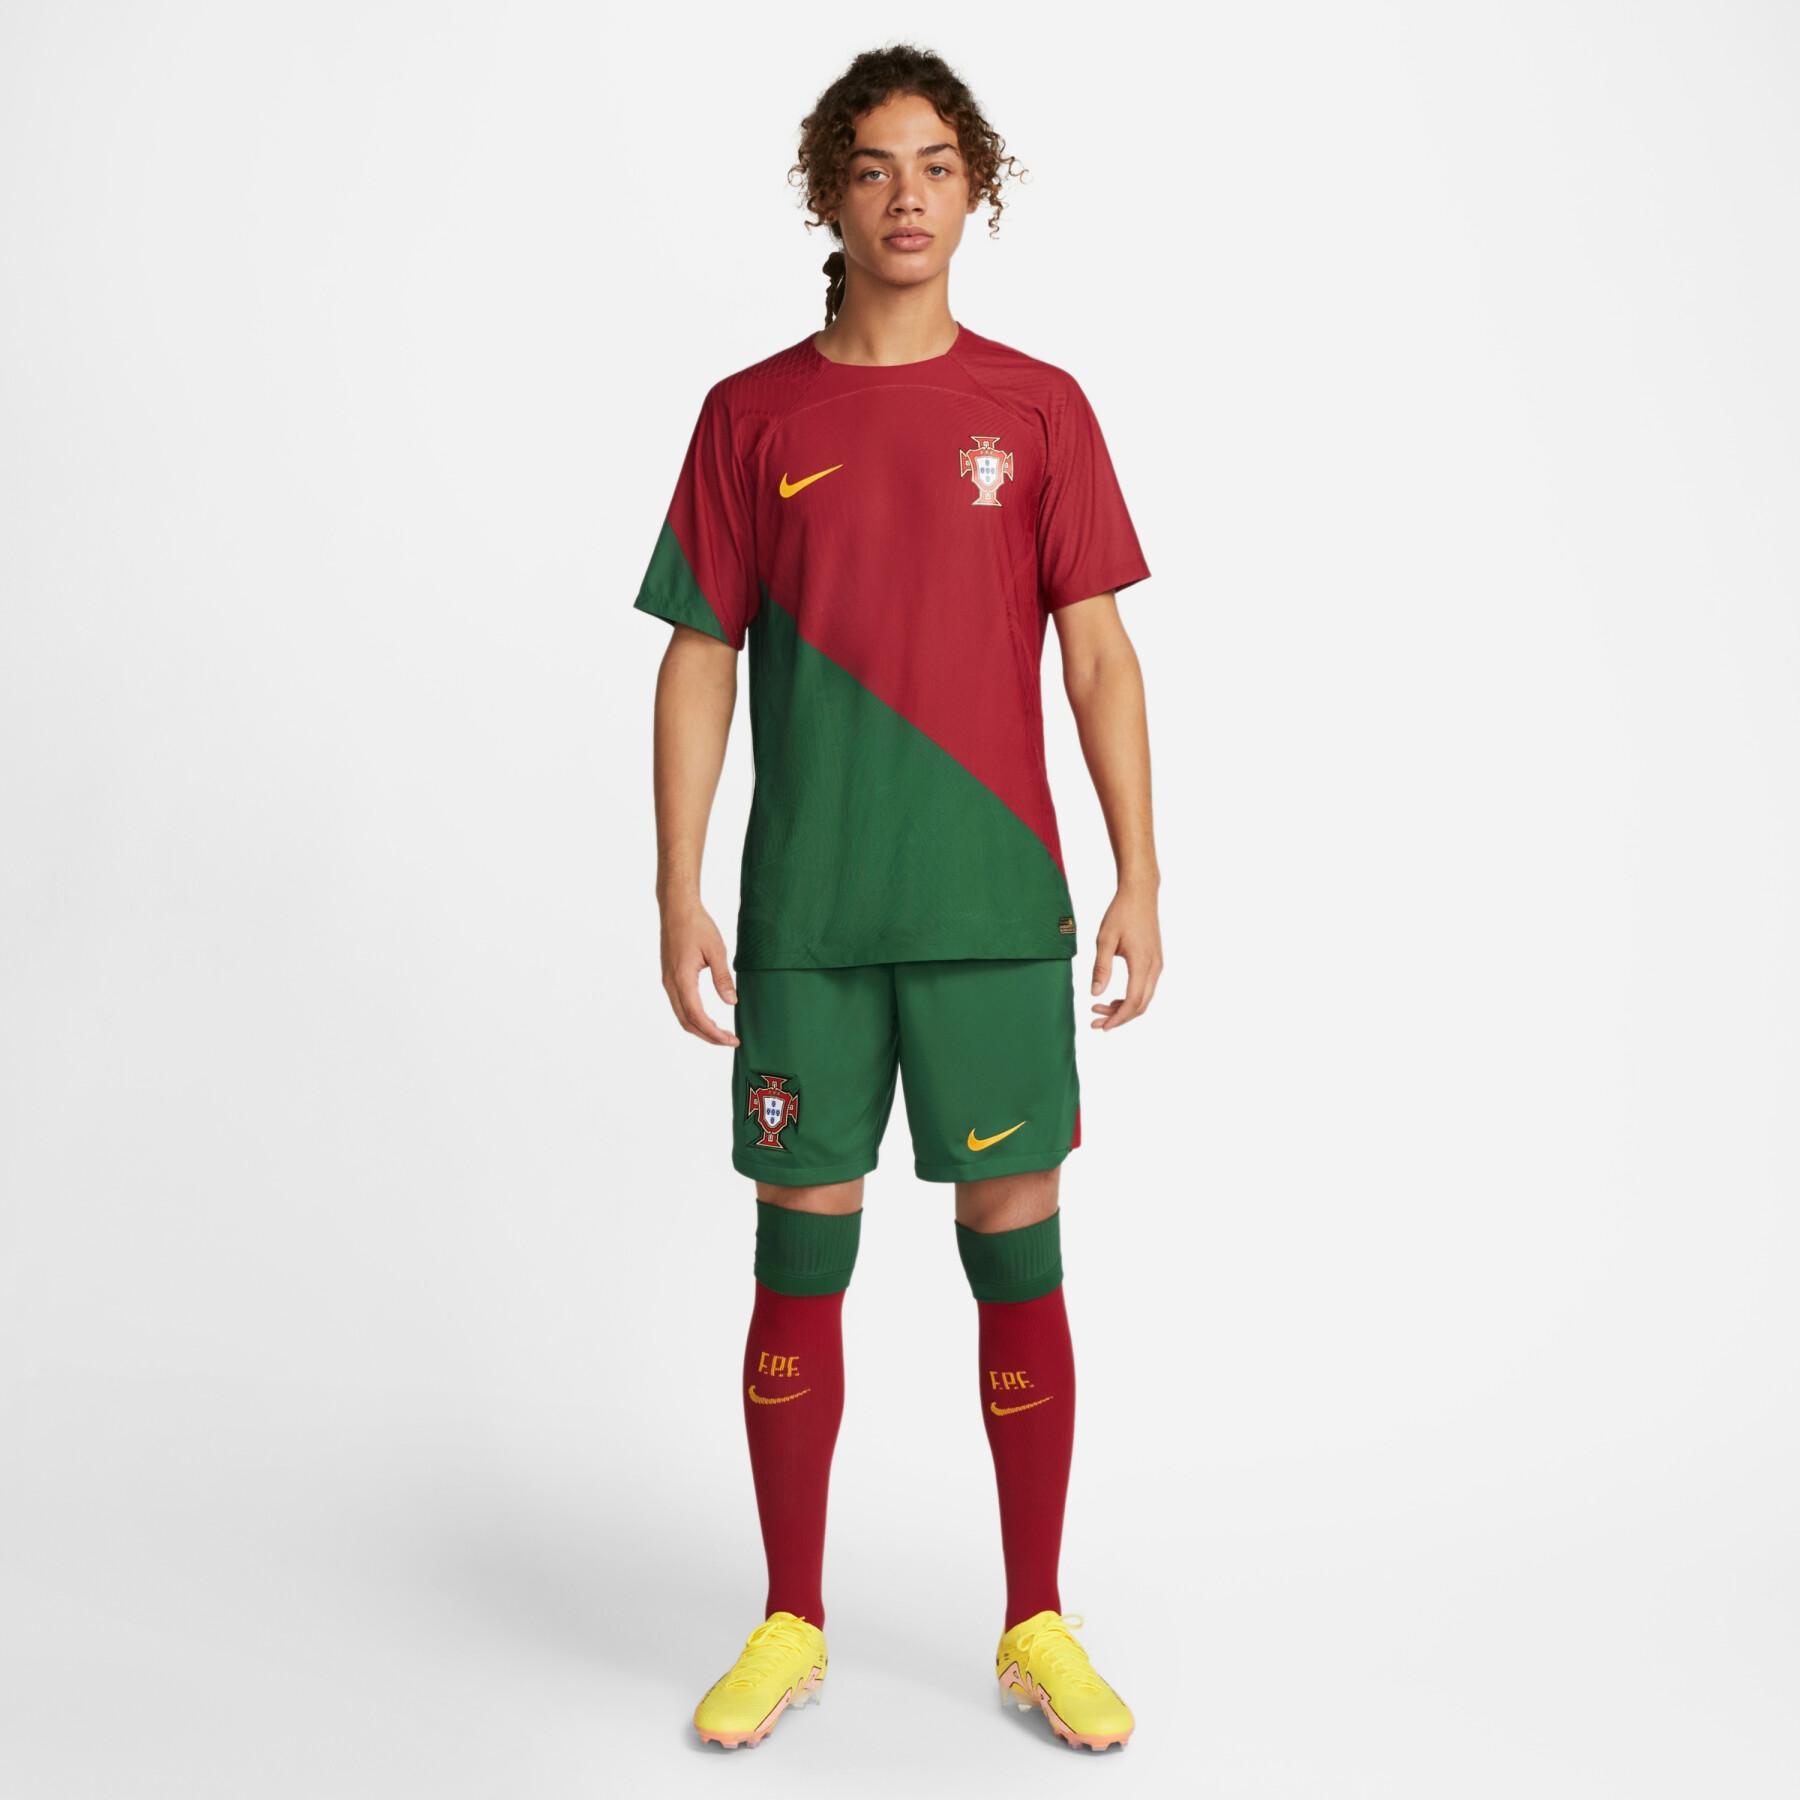 Camiseta auténtica de la Copa Mundial 2022 Portugal